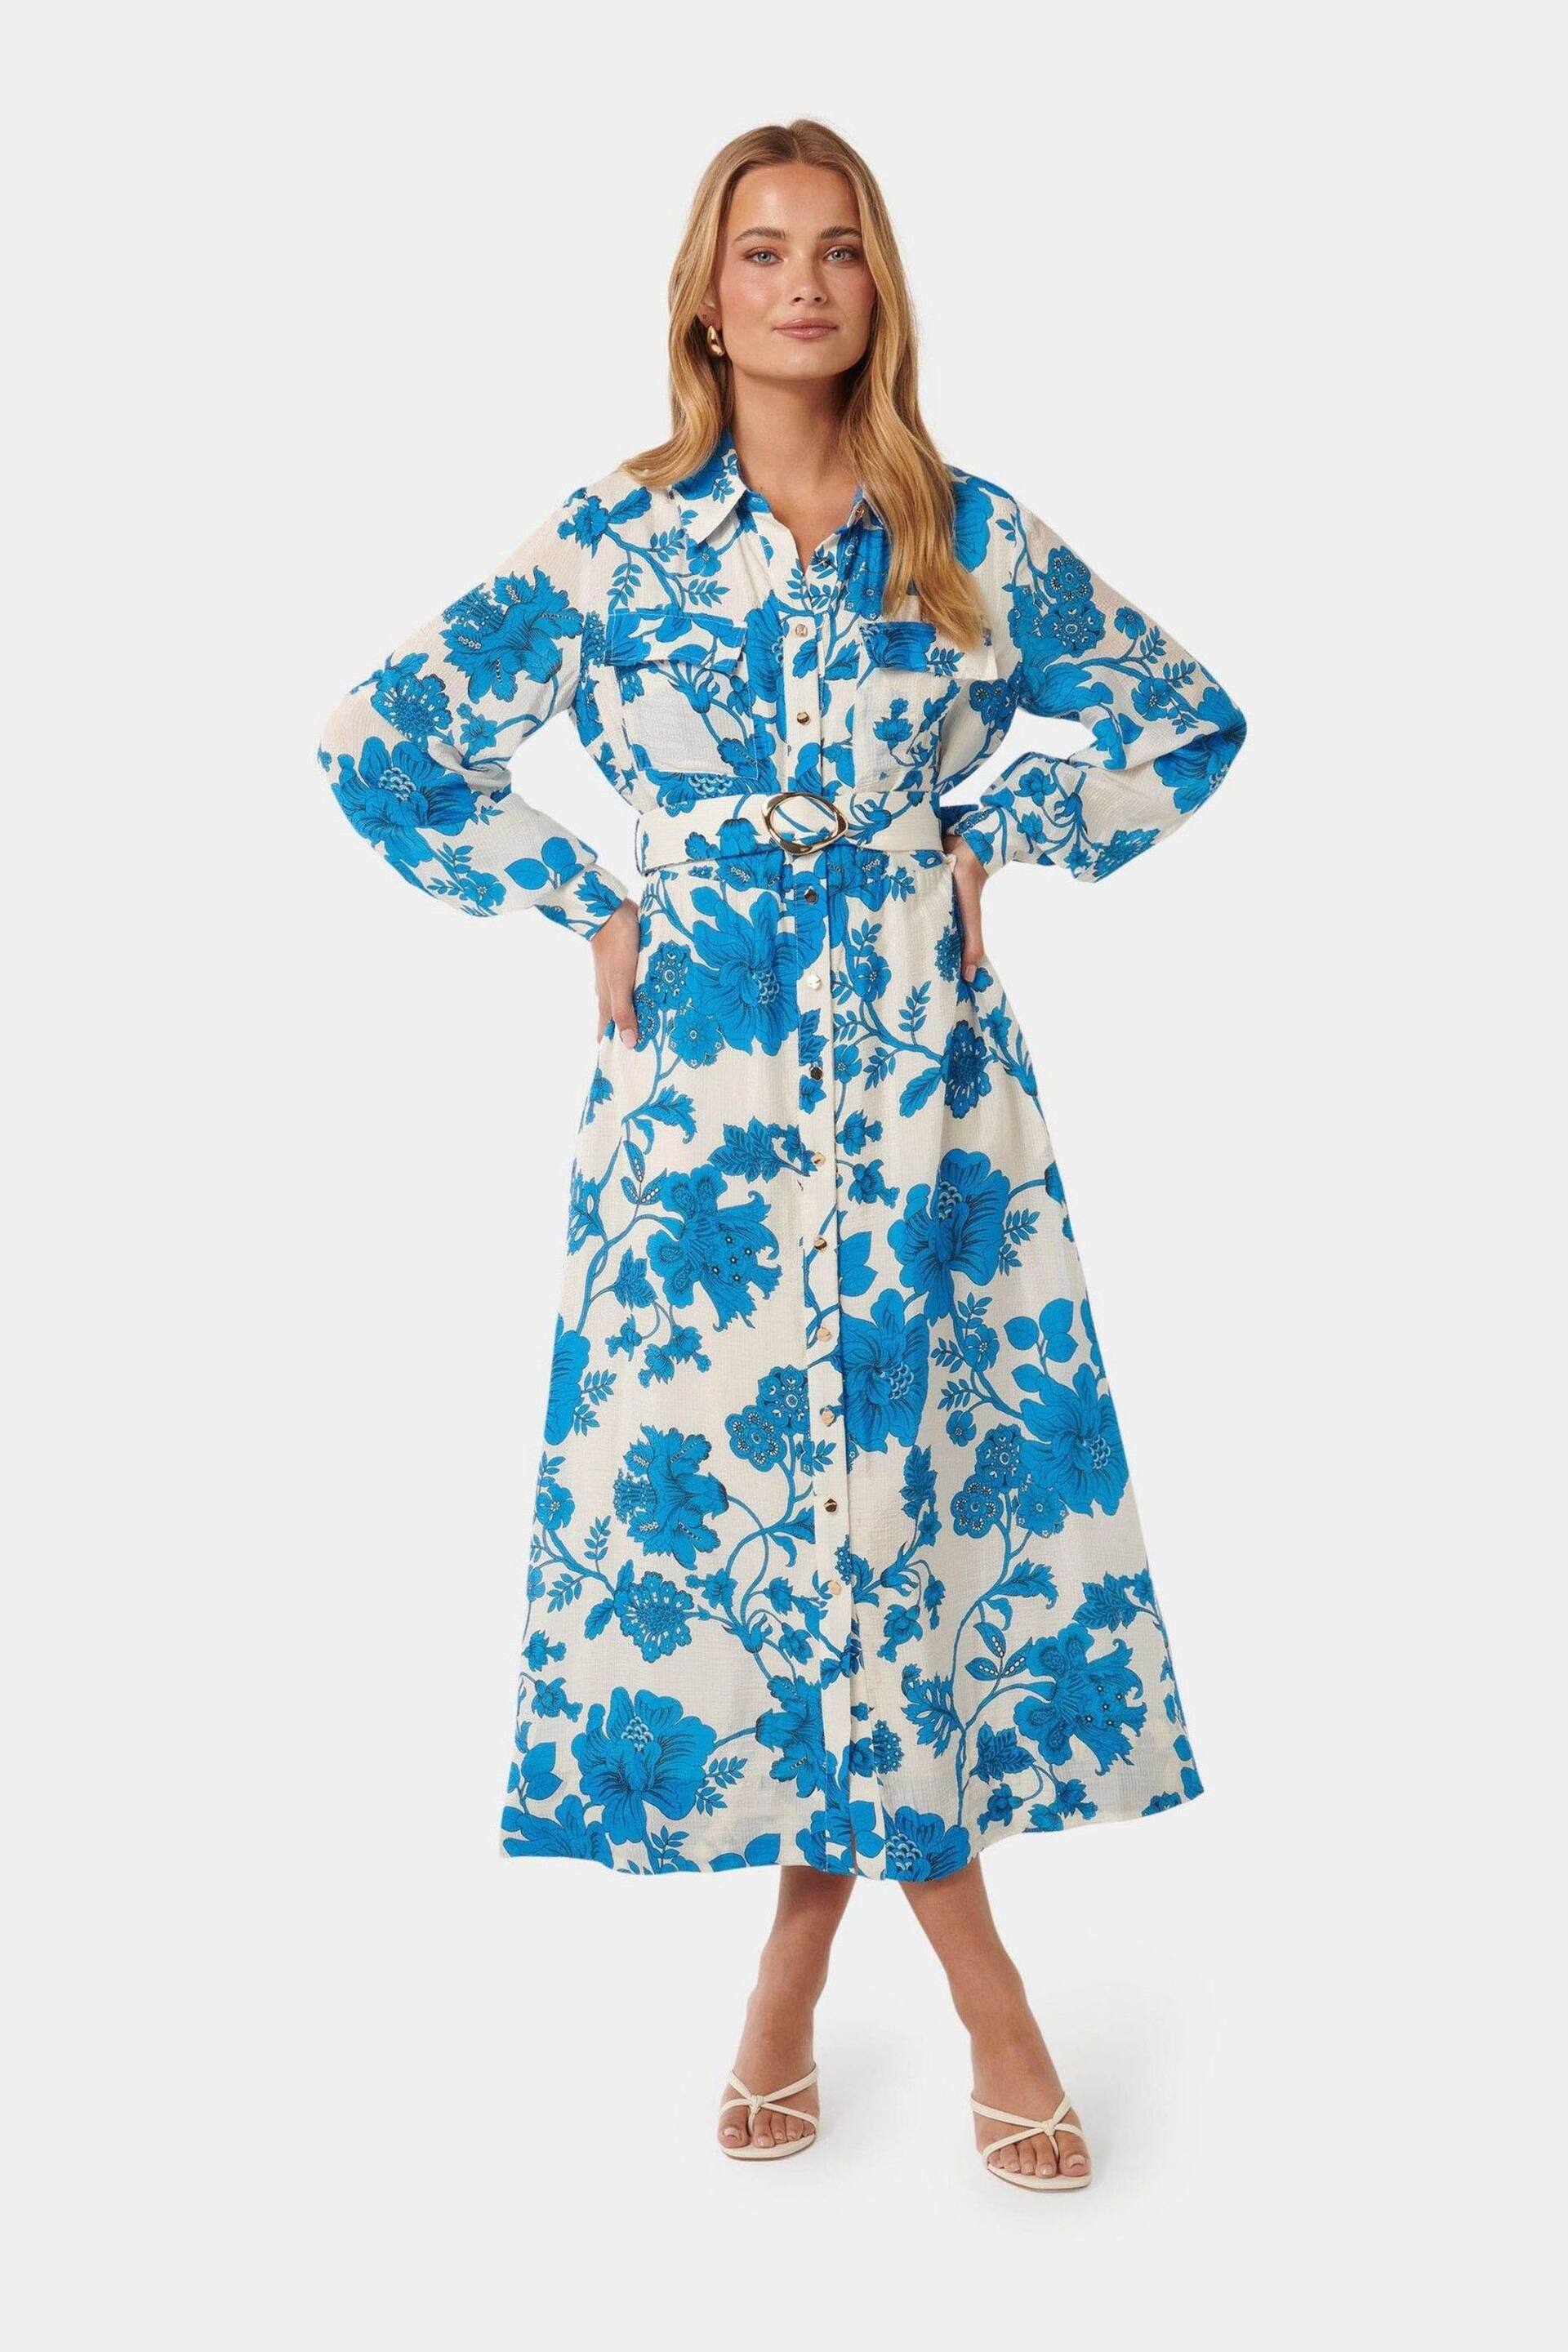 Forever New Blue Janie Printed Shirt Midi Dress - Image 1 of 4